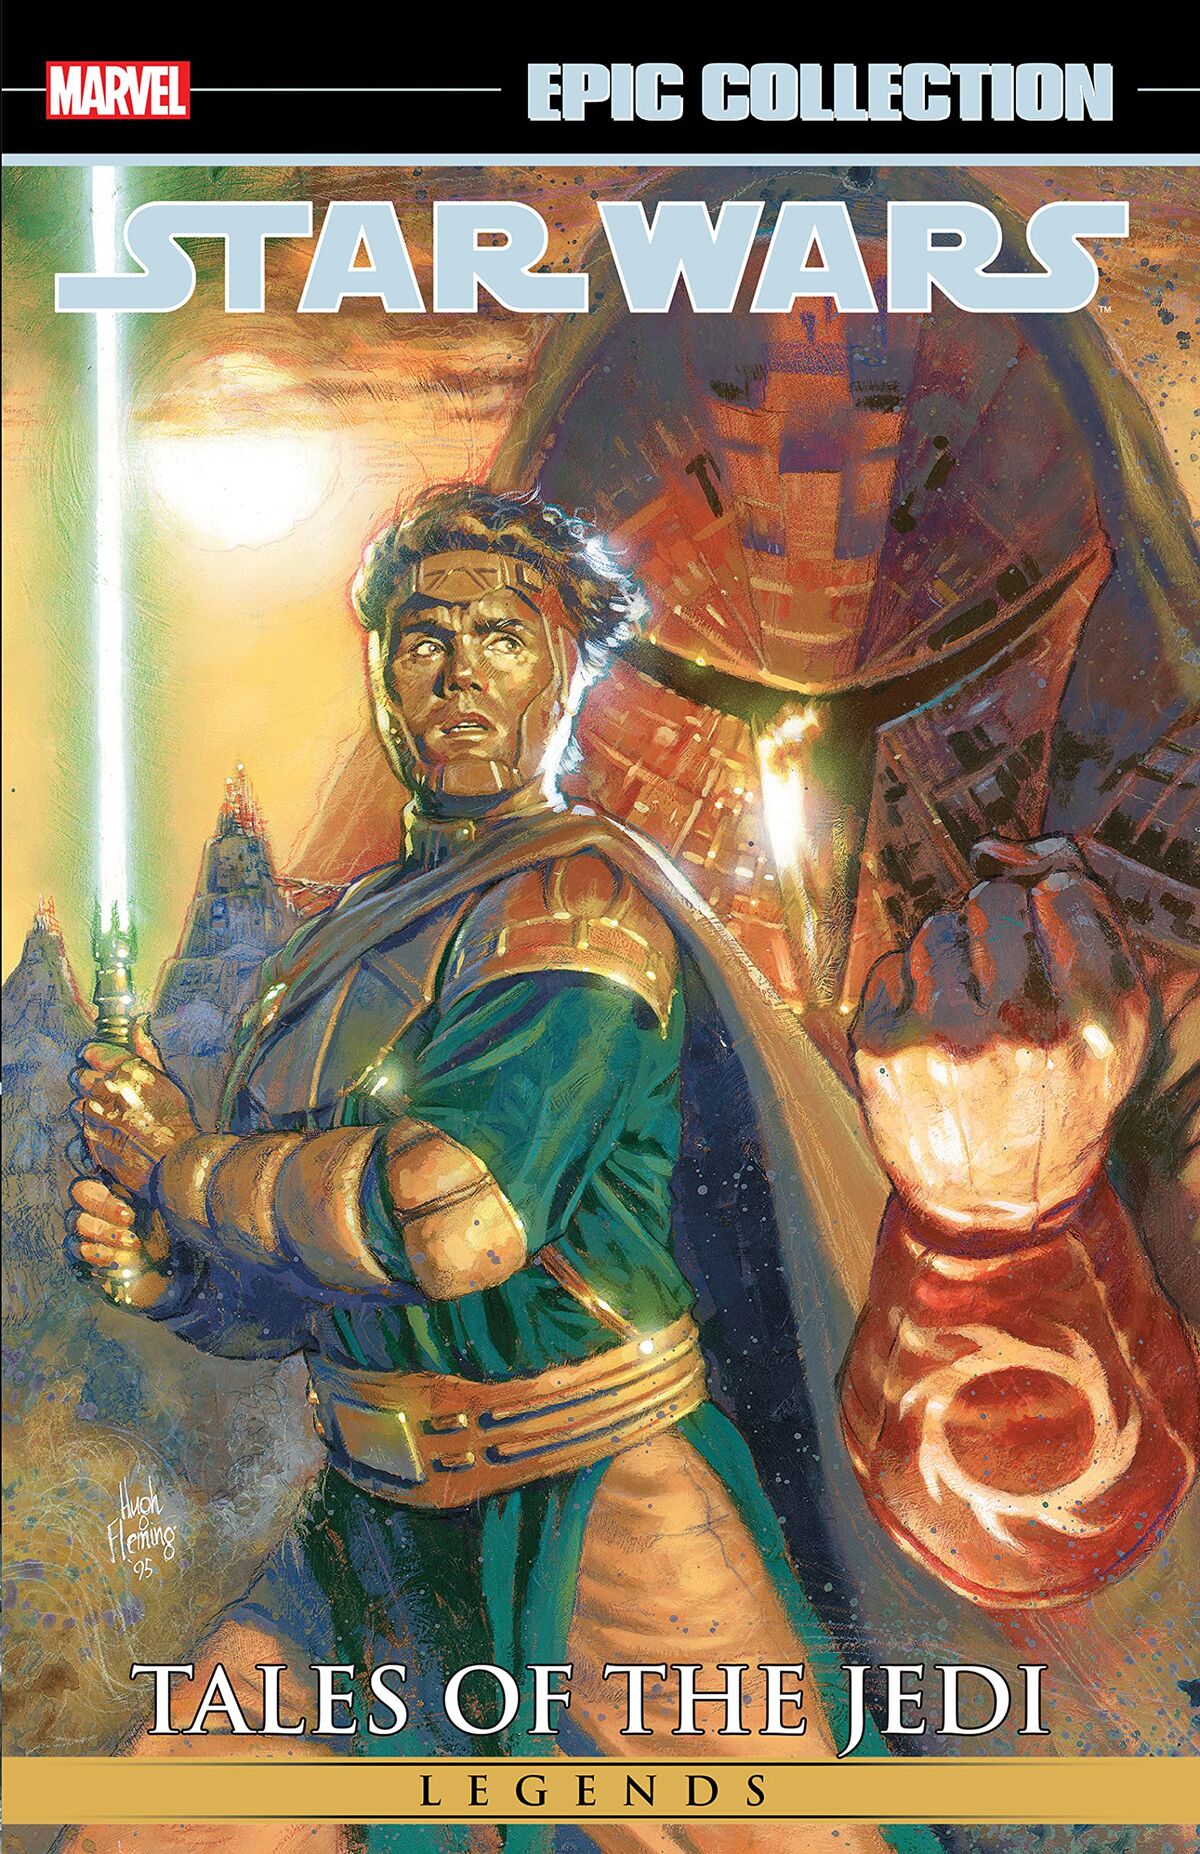 Star wars legends. Legendary Tales 3. Звёздные войны ОККО ТВ. Star Wars Legends: the New Republic Omnibus Vol 3.